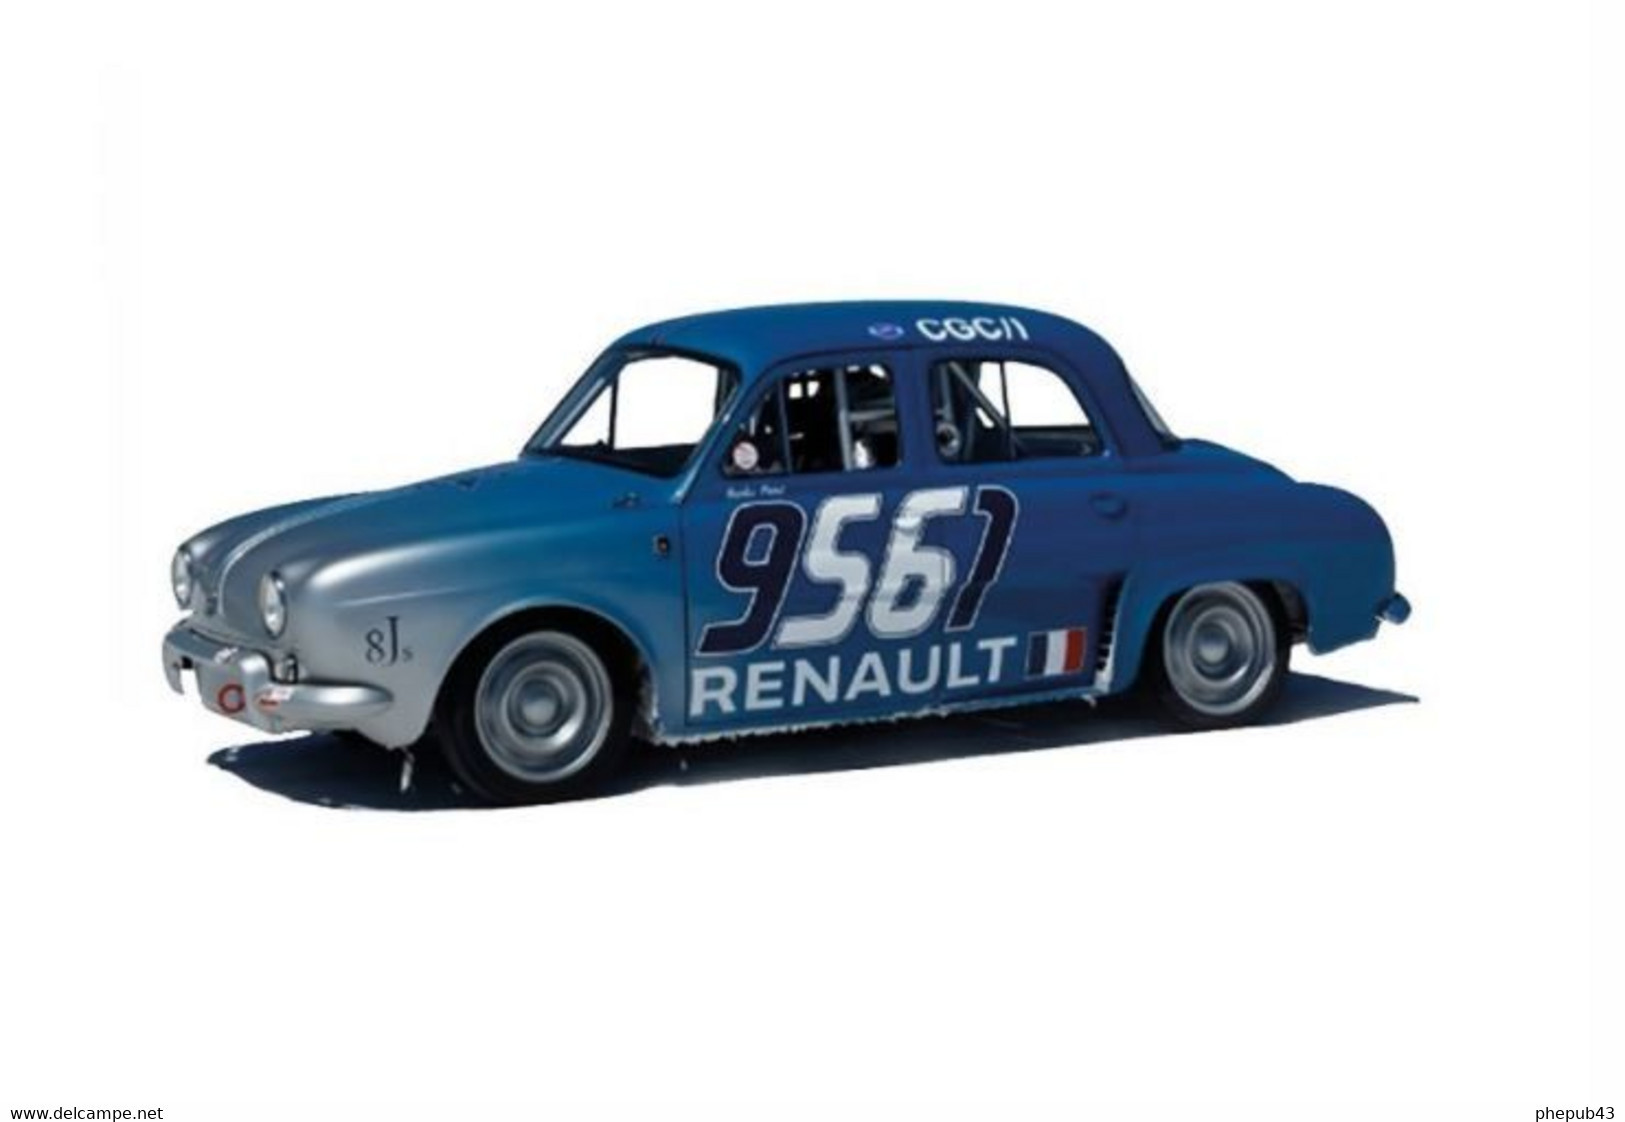 Renault Dauphine - Nicolas Prost - Speed Legend Bonneville 2016 #9561 - Bizarre - Bizarre